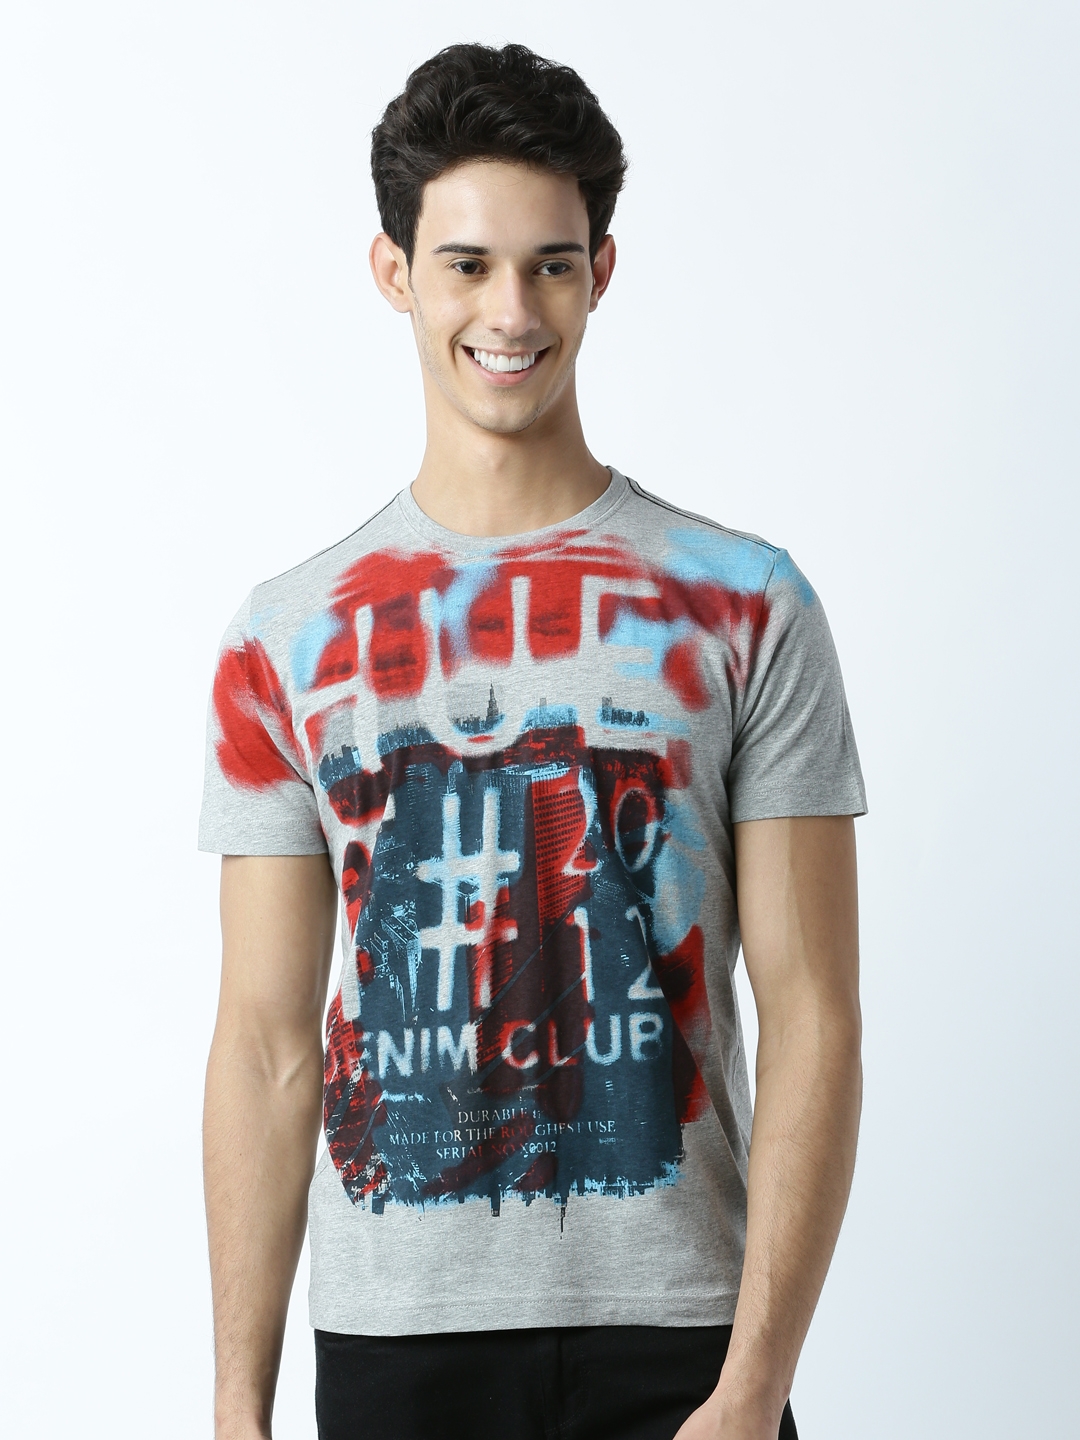 HUETRAP | Denim Club Printed Grey T-shirt 